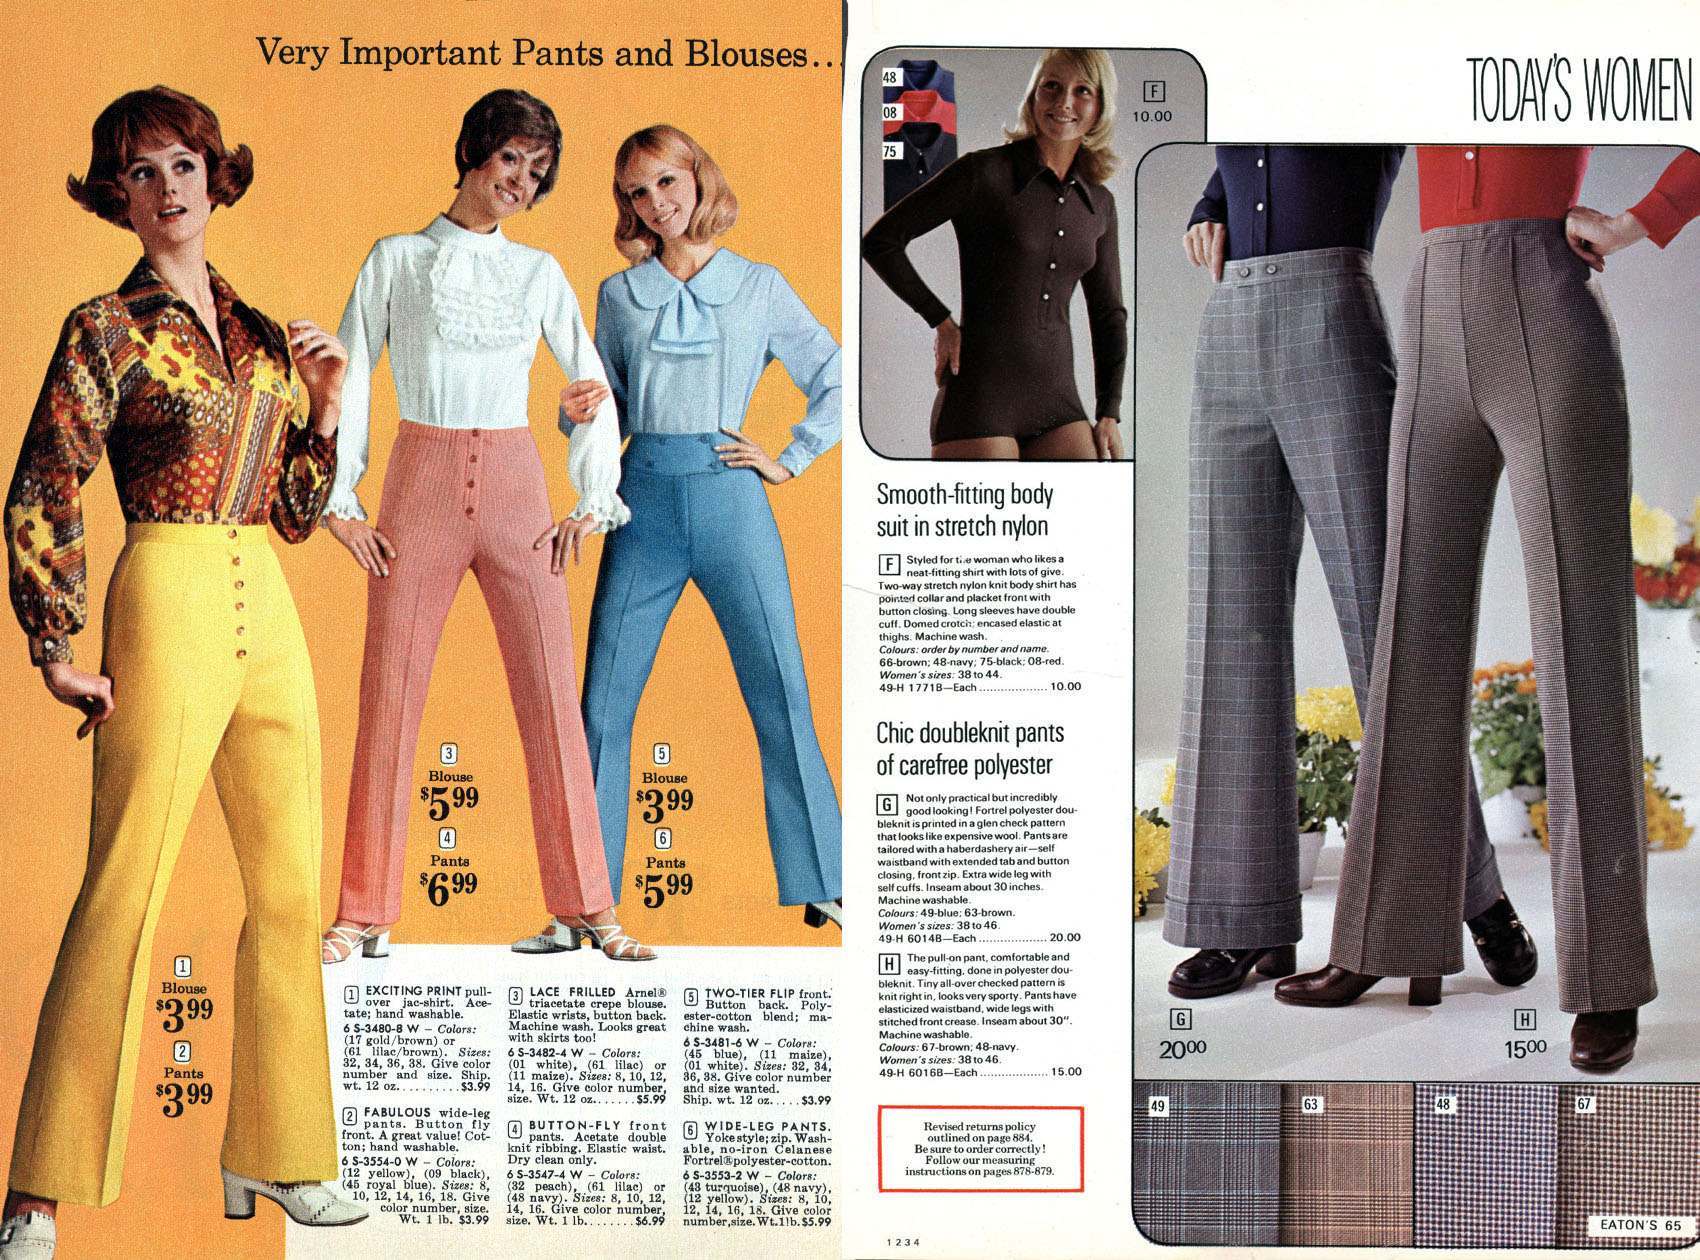 Pants | That 70s Suit vintage bellbottoms / wide leg pants Pin on City of C...